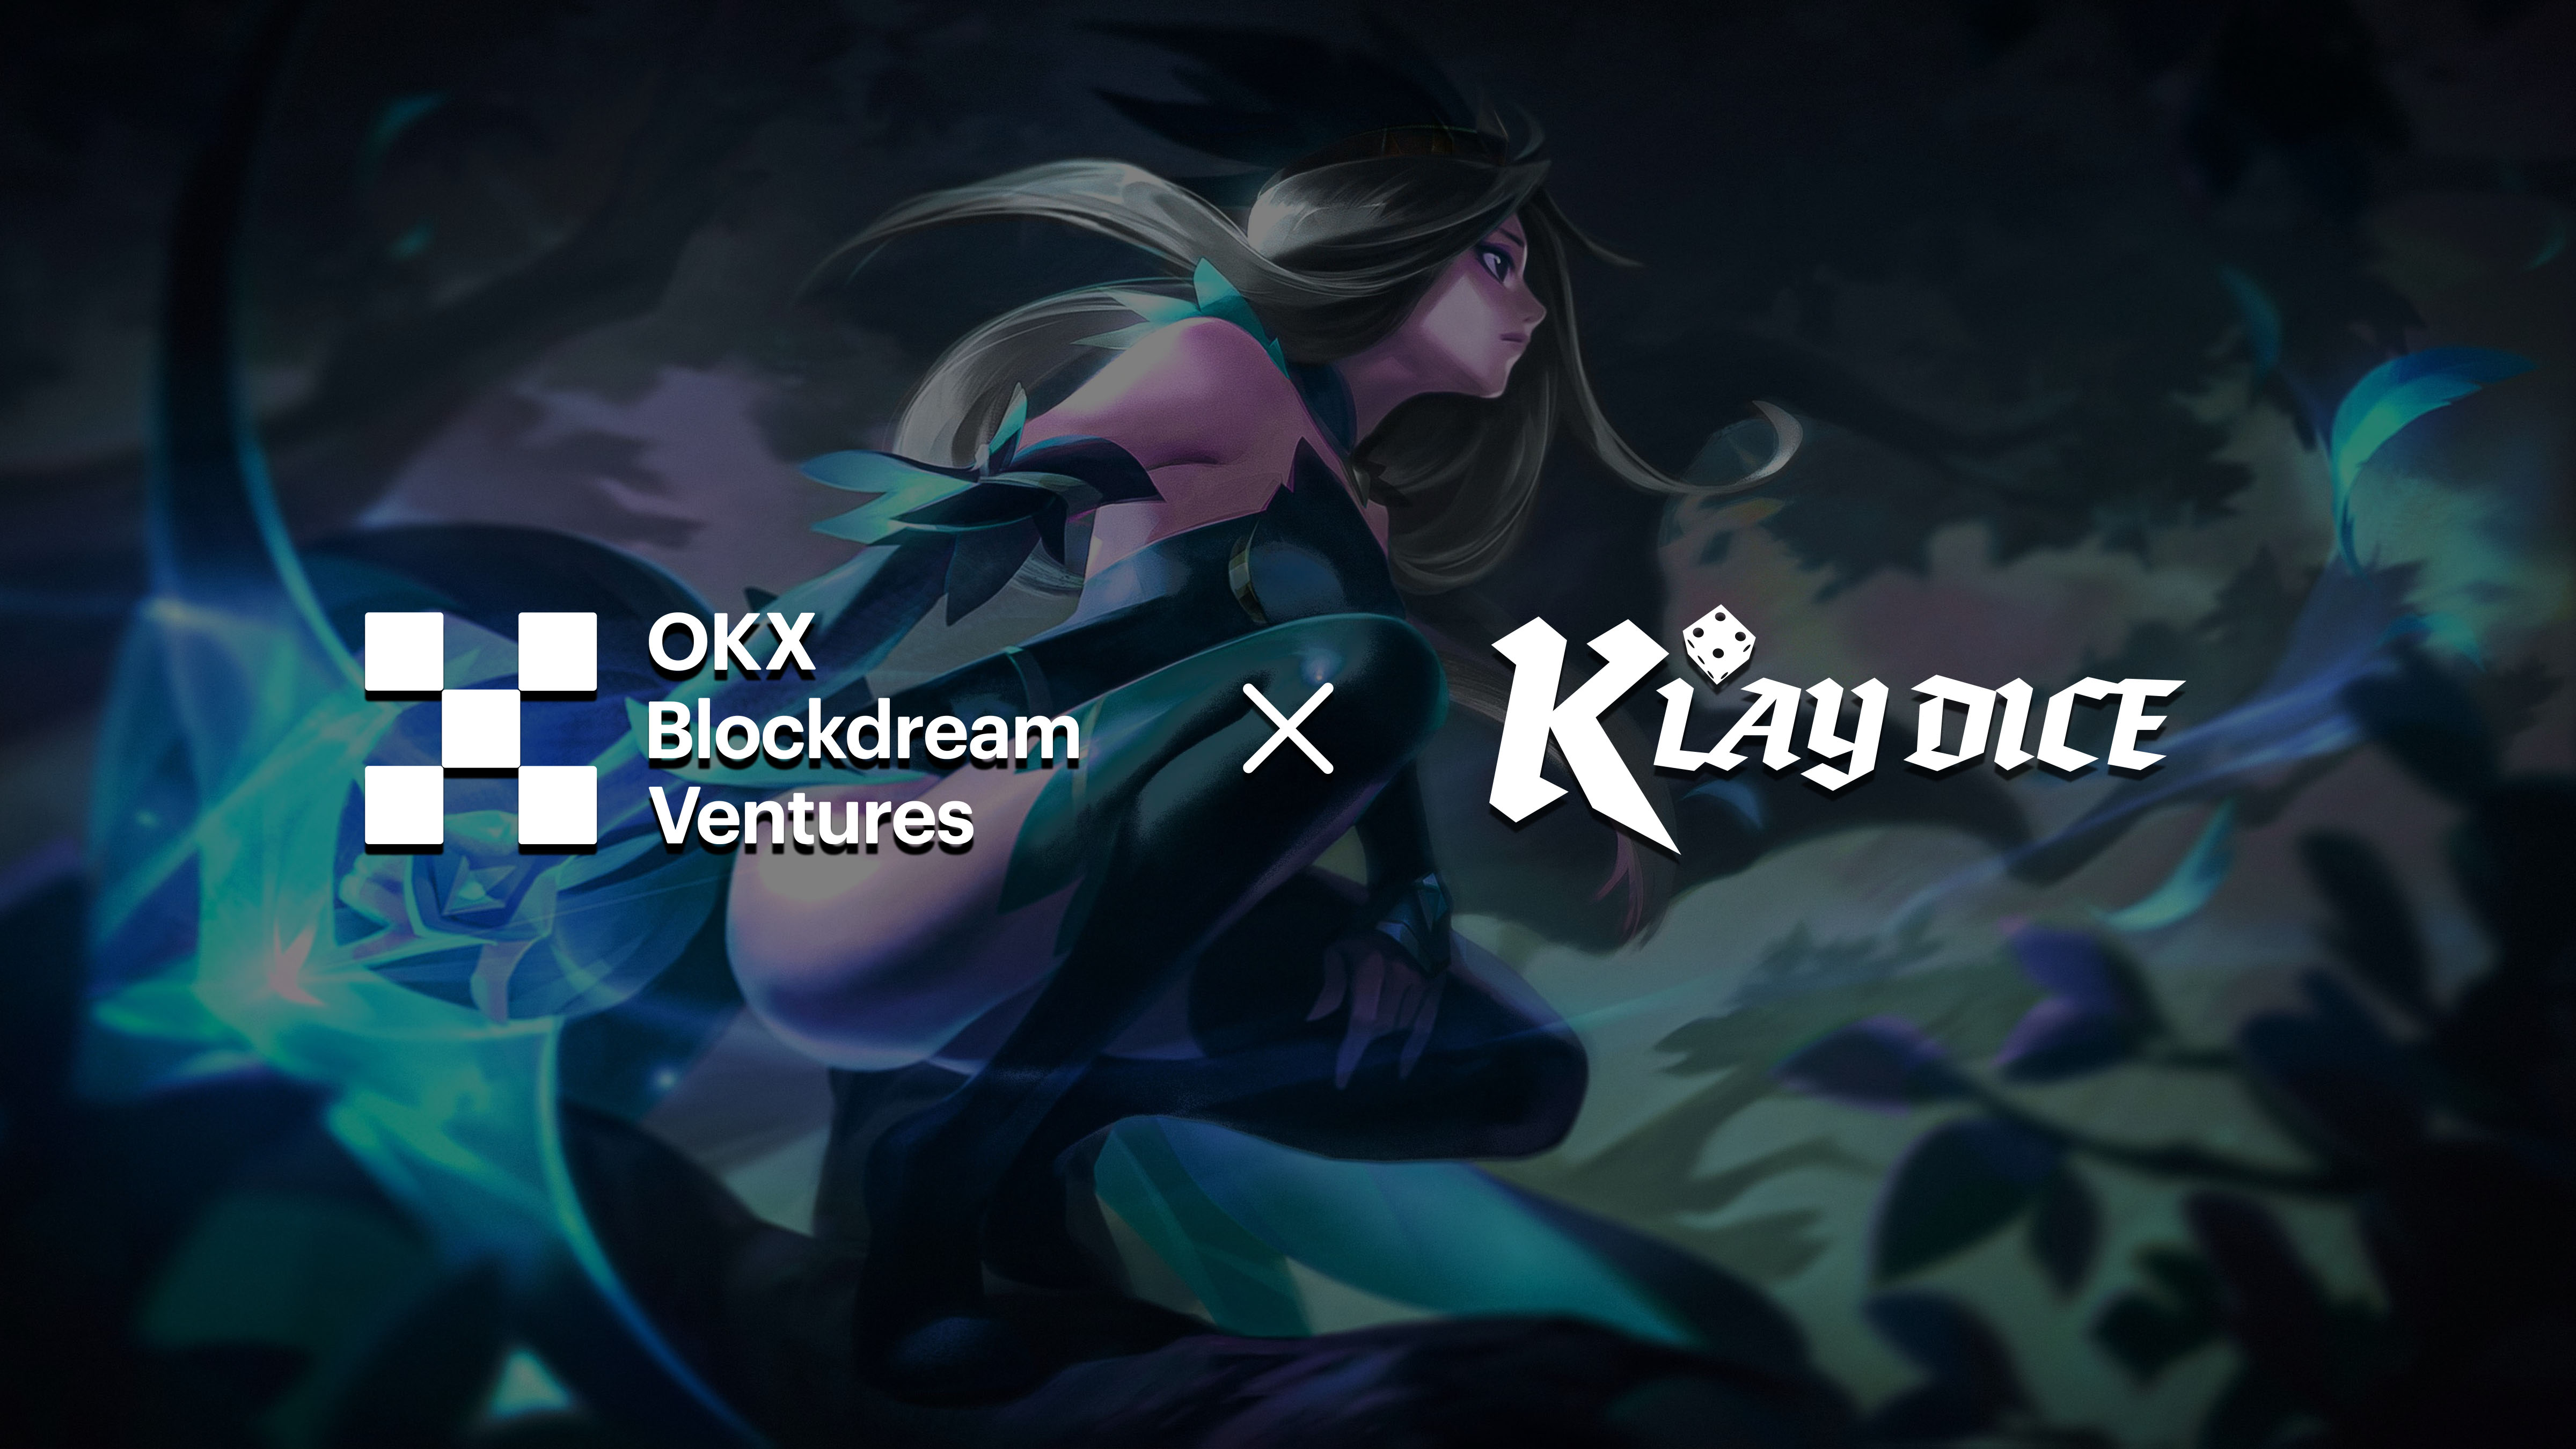 'KLAYDICE,' a Klaytn-based P2E platform, attracts investment from OKX Blockdream Ventures